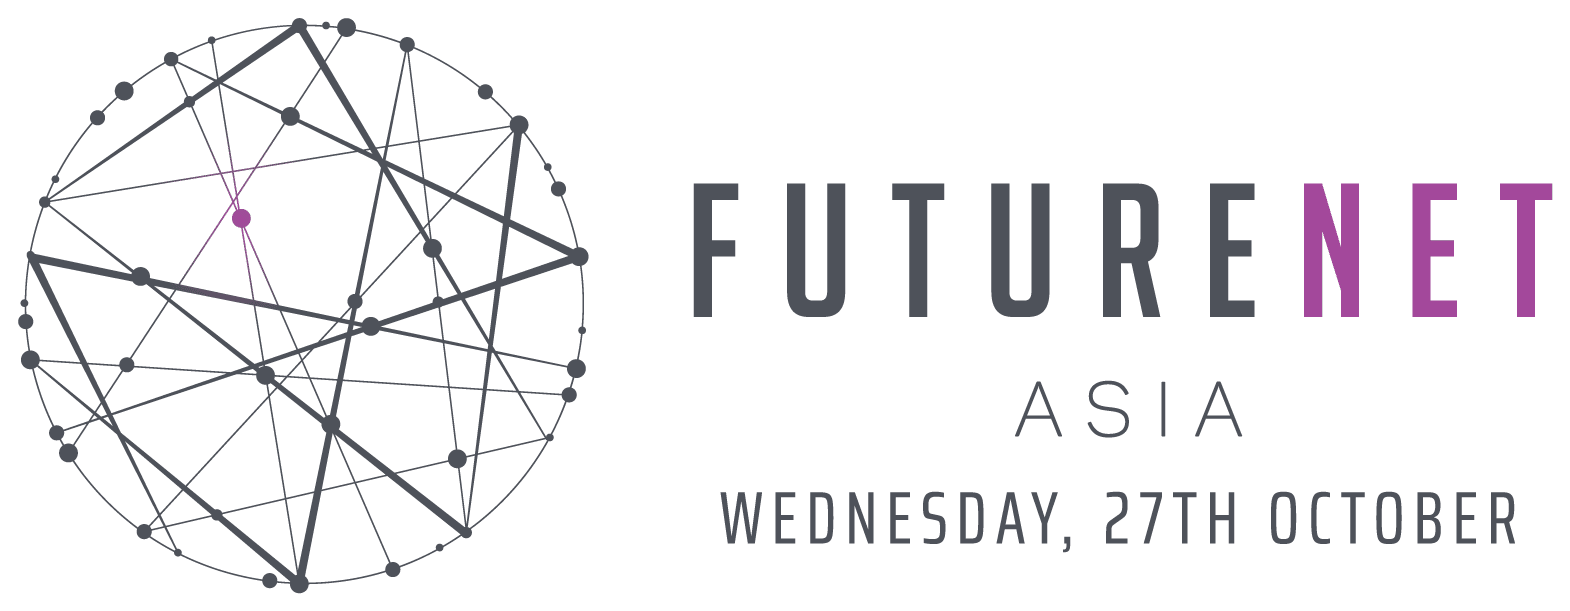 FutureNet Asia 2021